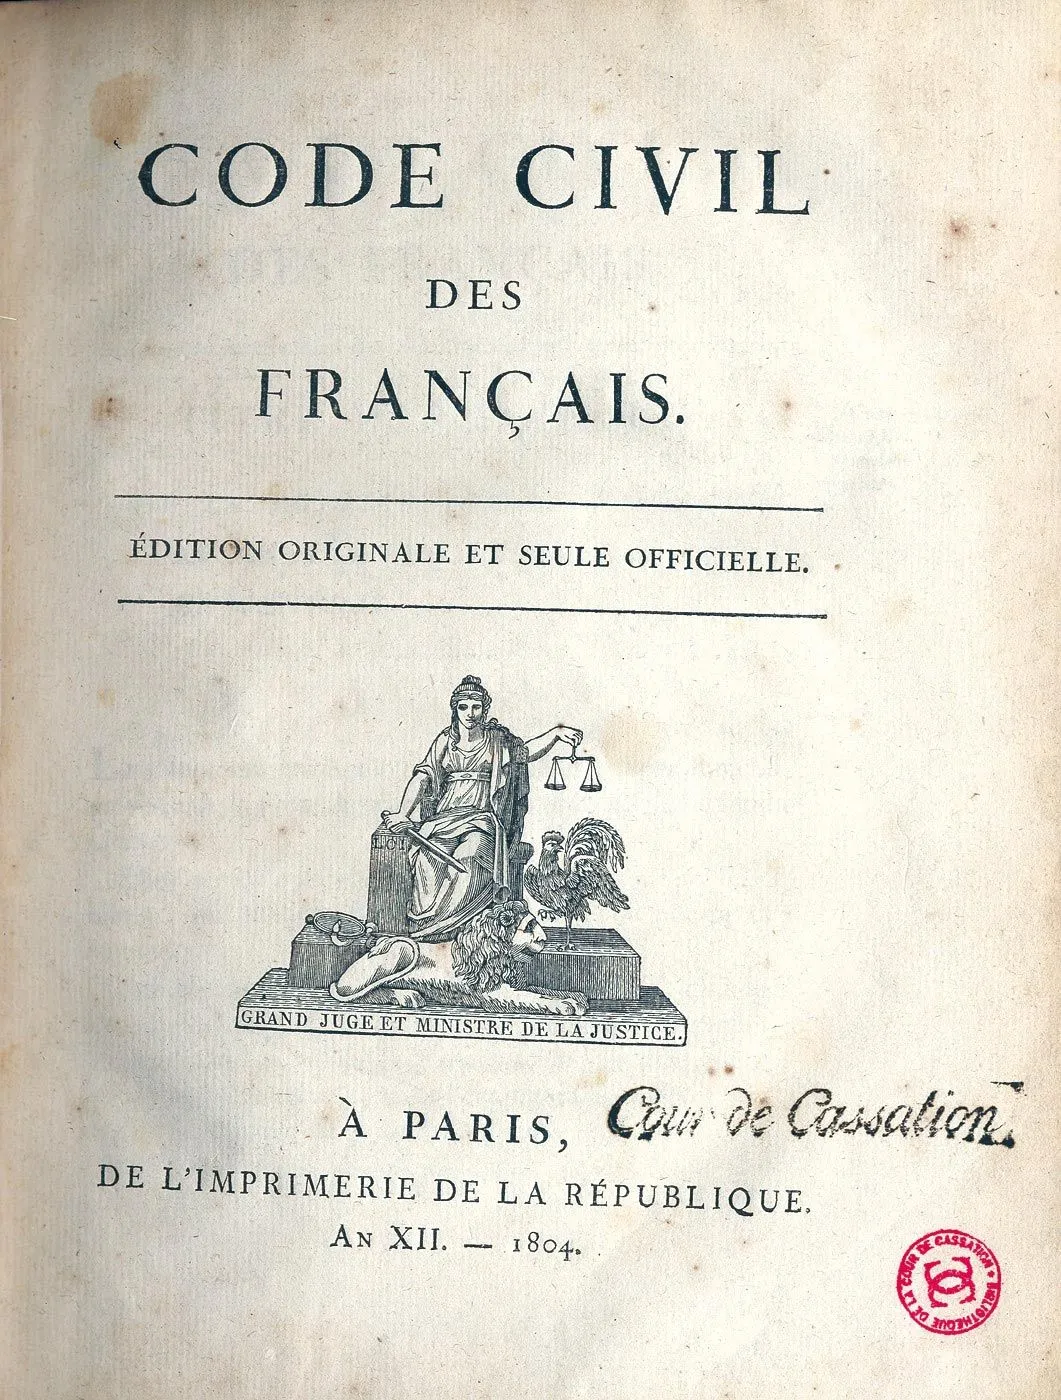 Doc. 2 : Le Code civil